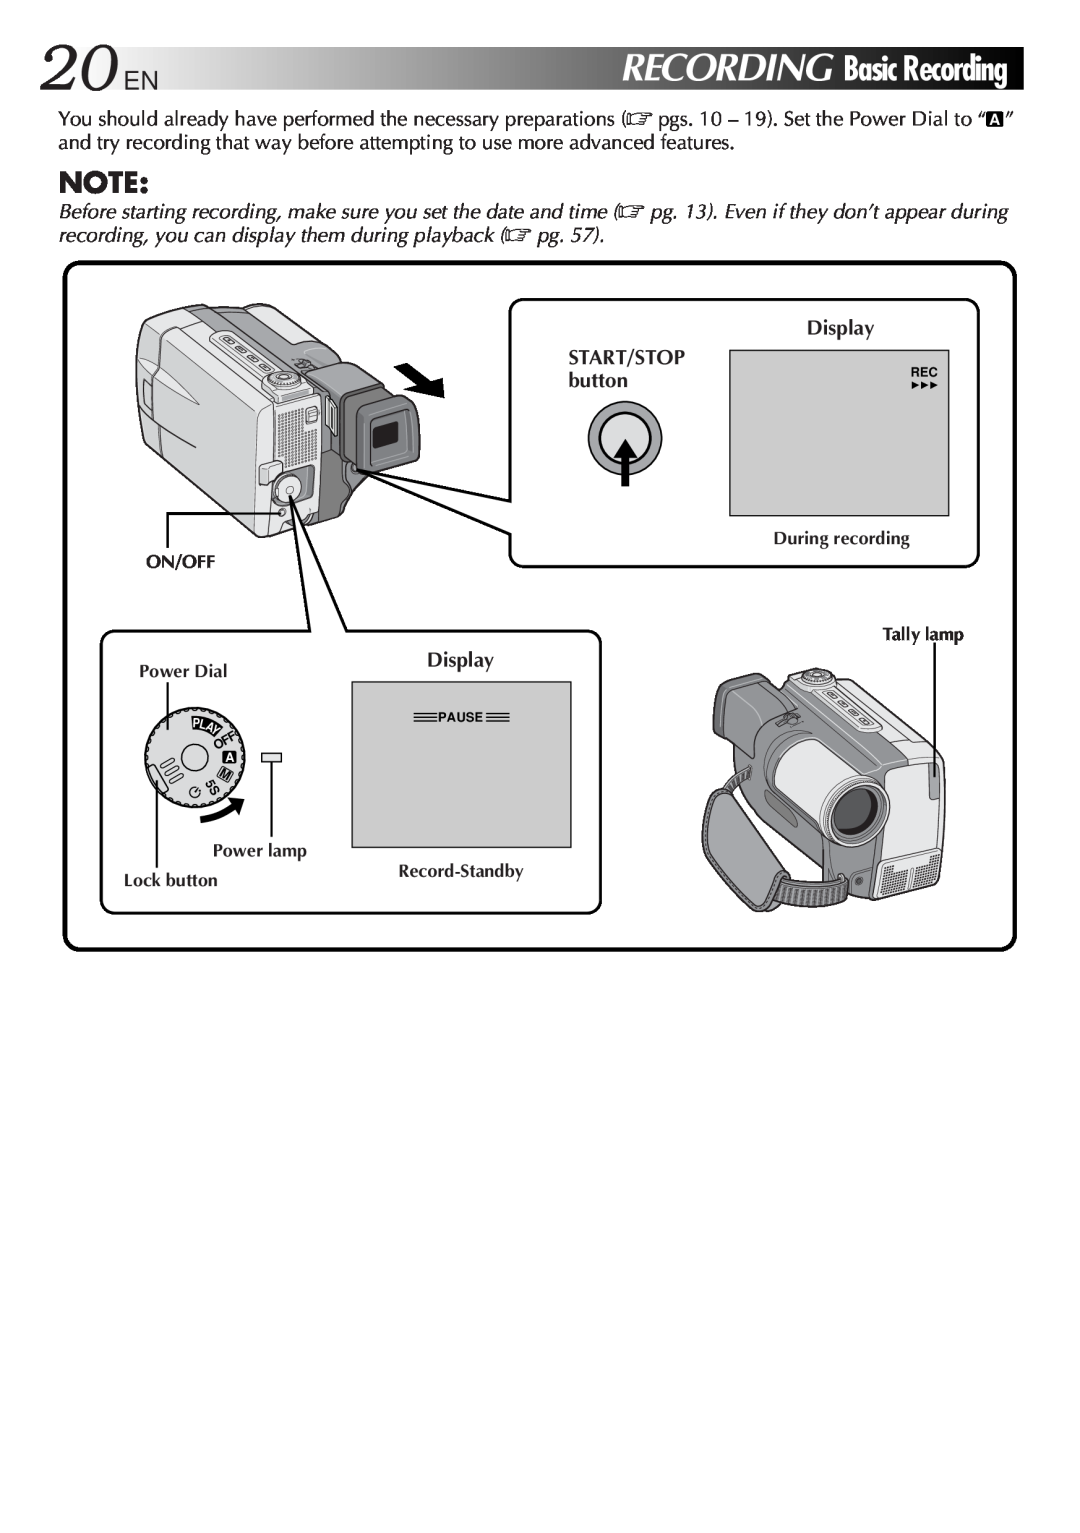 JVC GR-DVL9000 manual 20ENRECORDING, BasicRecording, Display, START/STOP button, Play, M 5S 